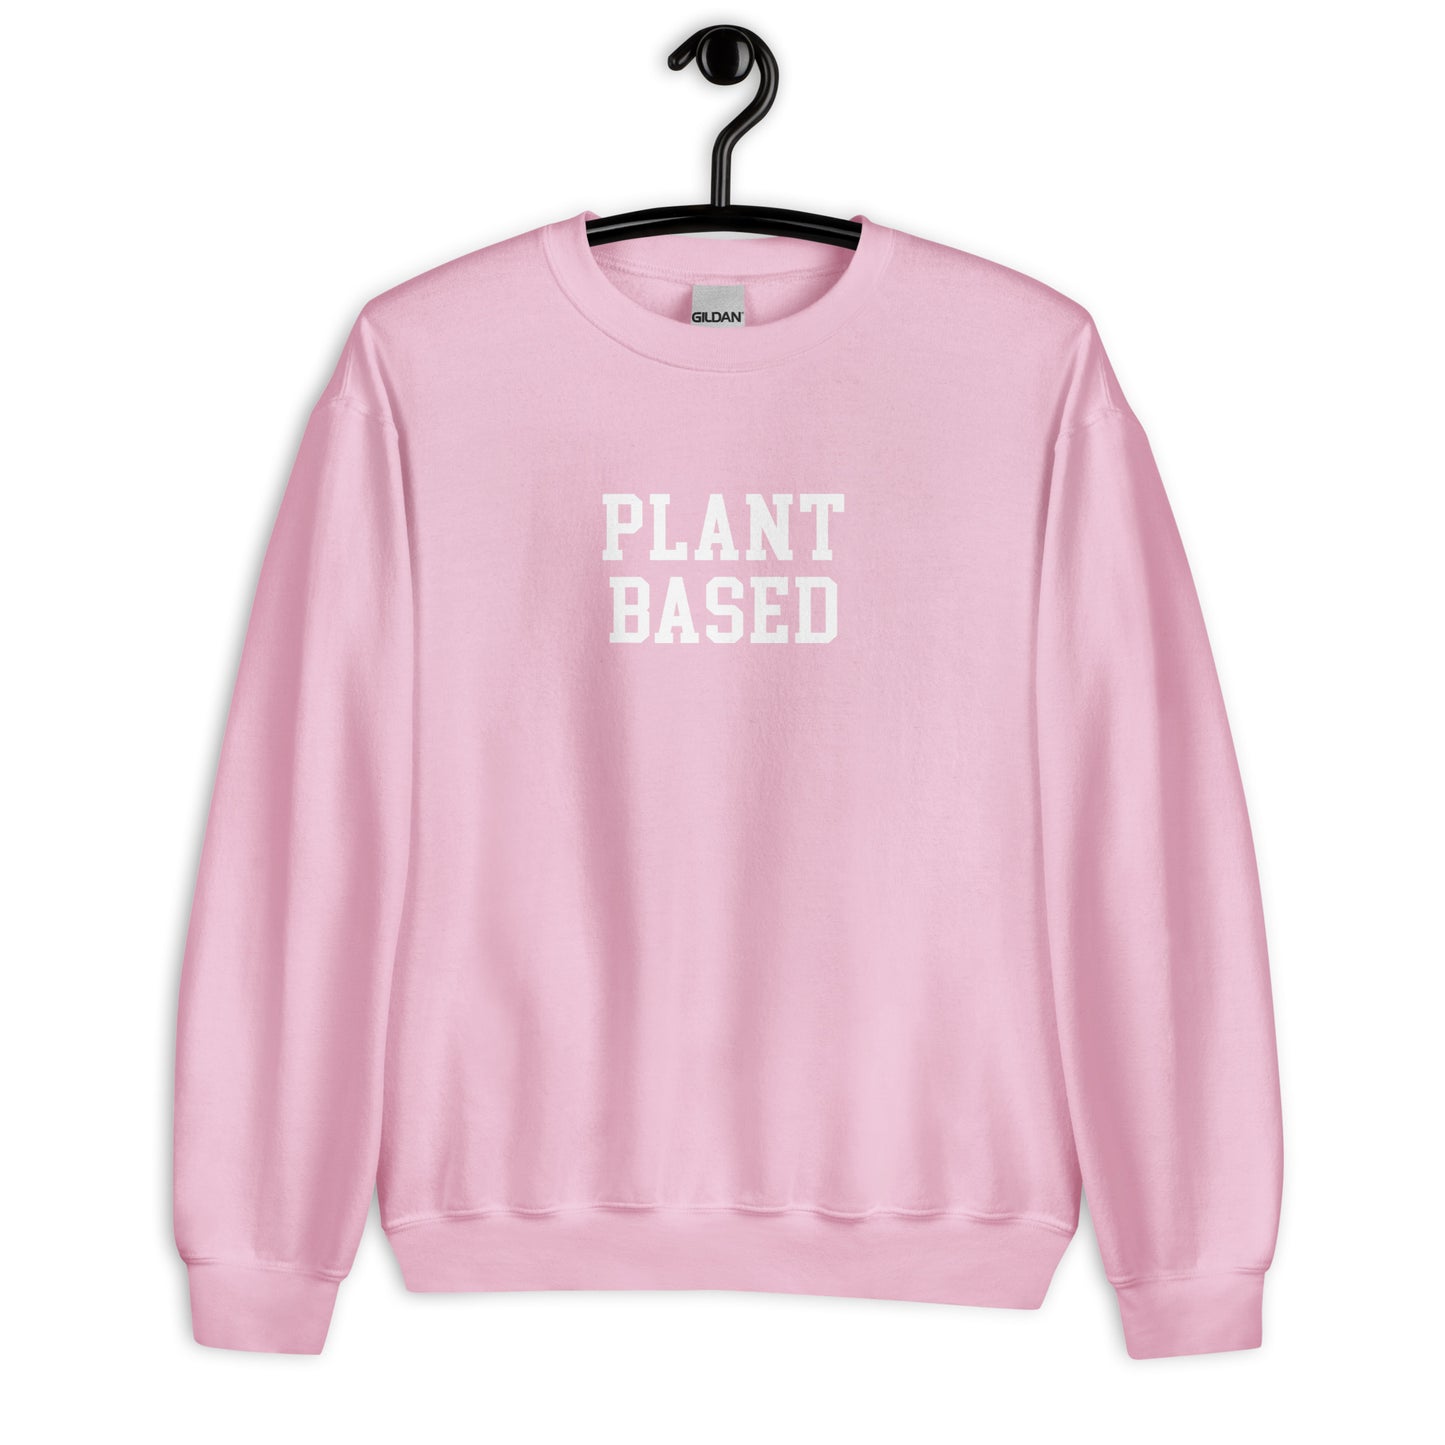 Plant Based Sweatshirt - Arched Font